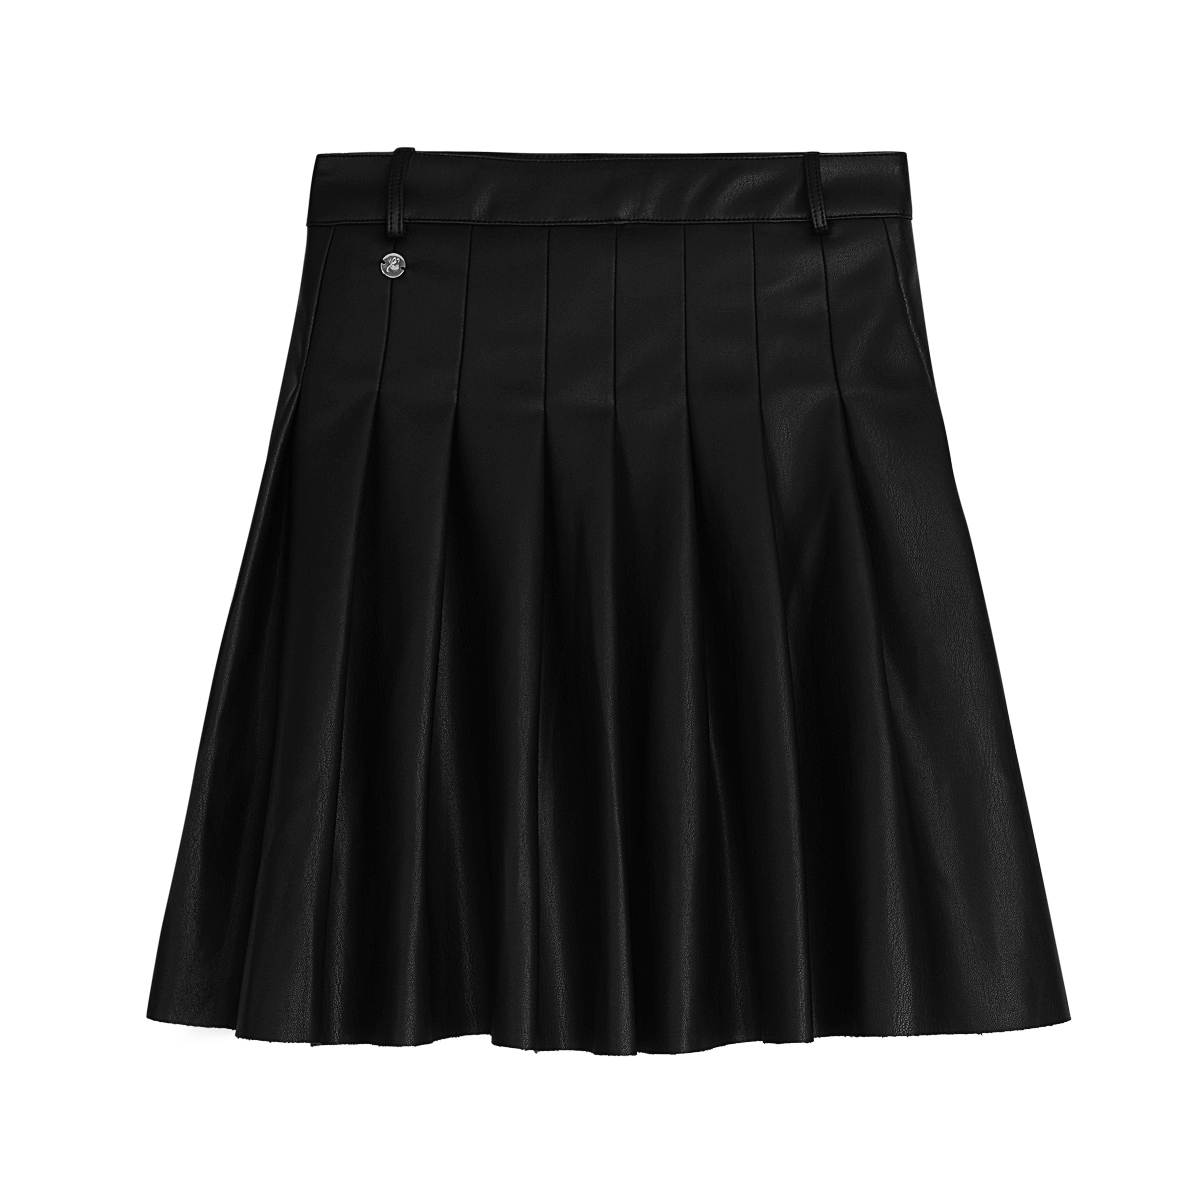 PU skirt with pleats